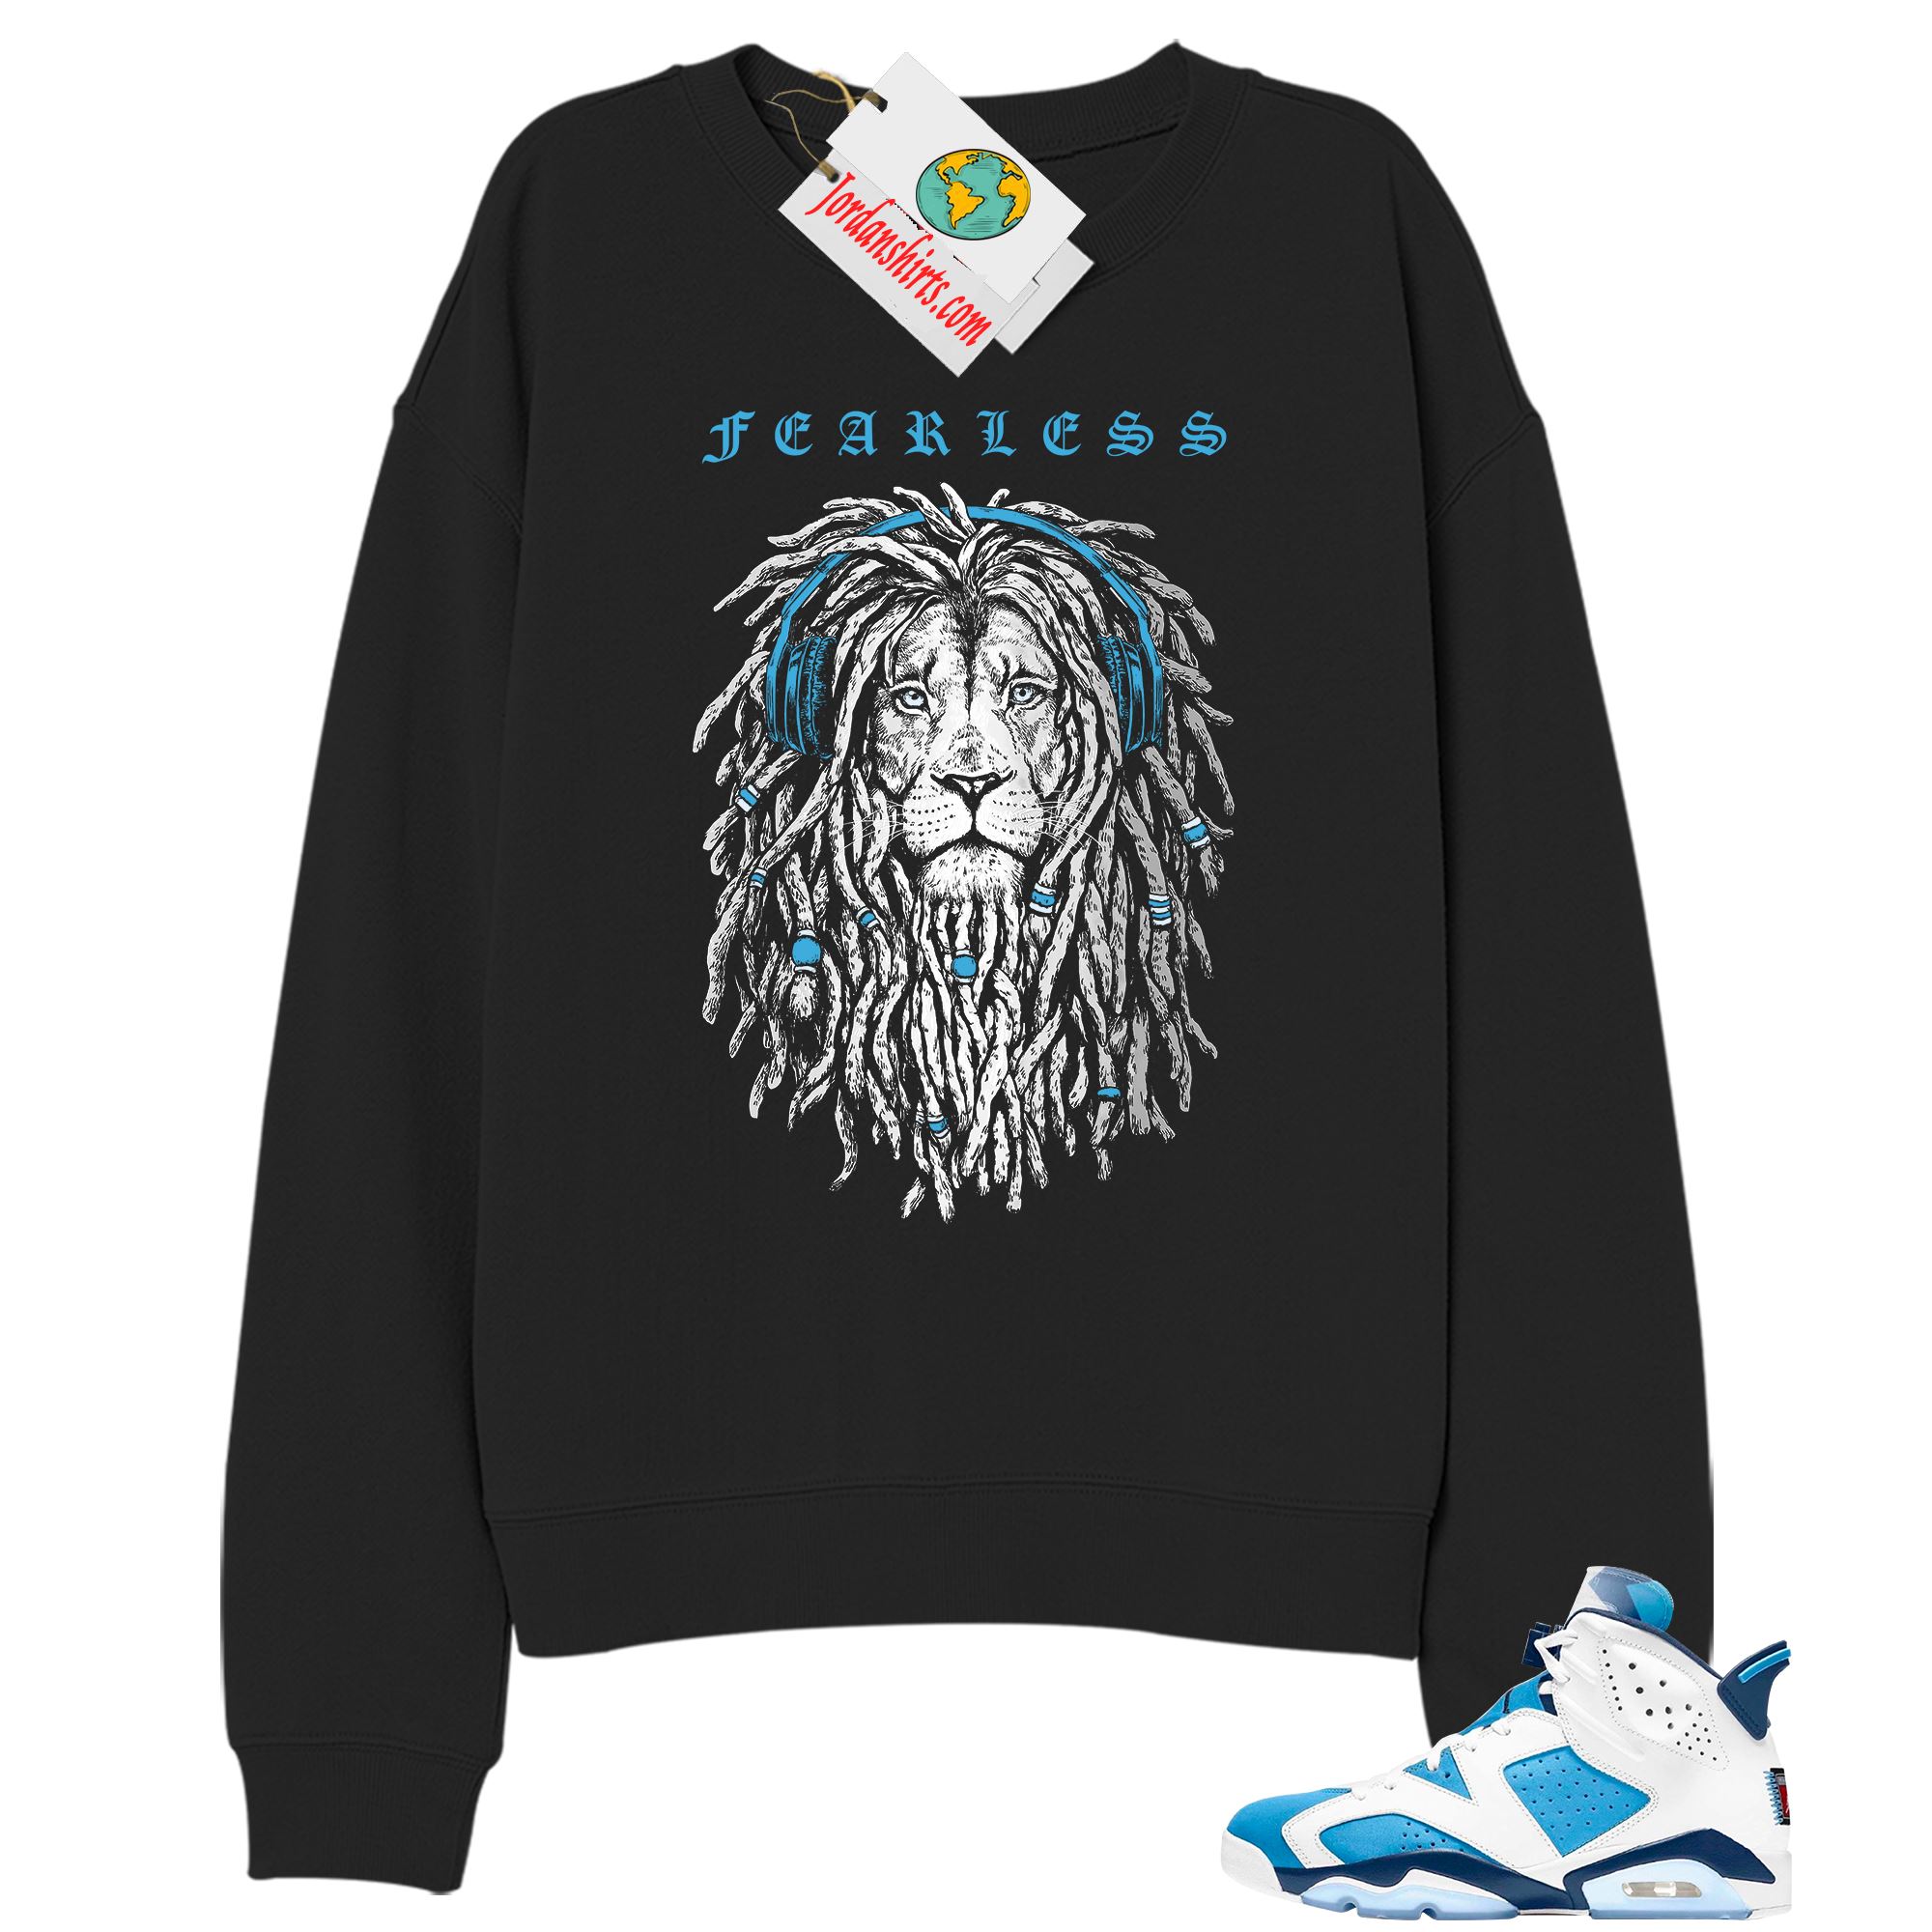 Jordan 6 Sweatshirt, Fearless Lion Black Sweatshirt Air Jordan 6 Unc 6s Full Size Up To 5xl